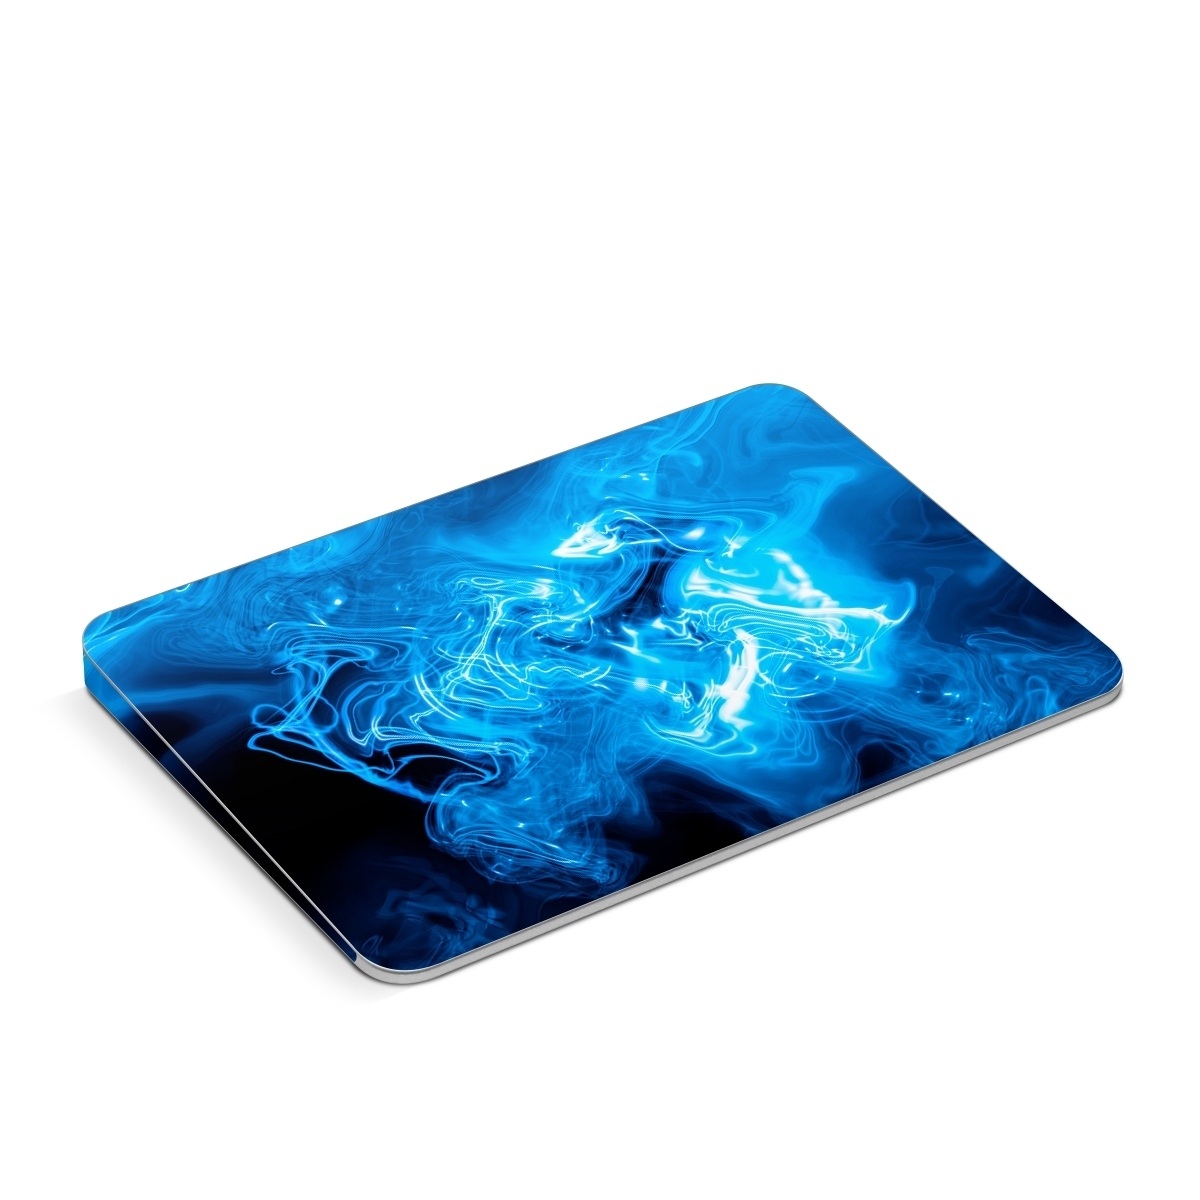 Apple Magic Trackpad Skin design of Blue, Water, Electric blue, Organism, Pattern, Smoke, Liquid, Art, with blue, black, purple colors